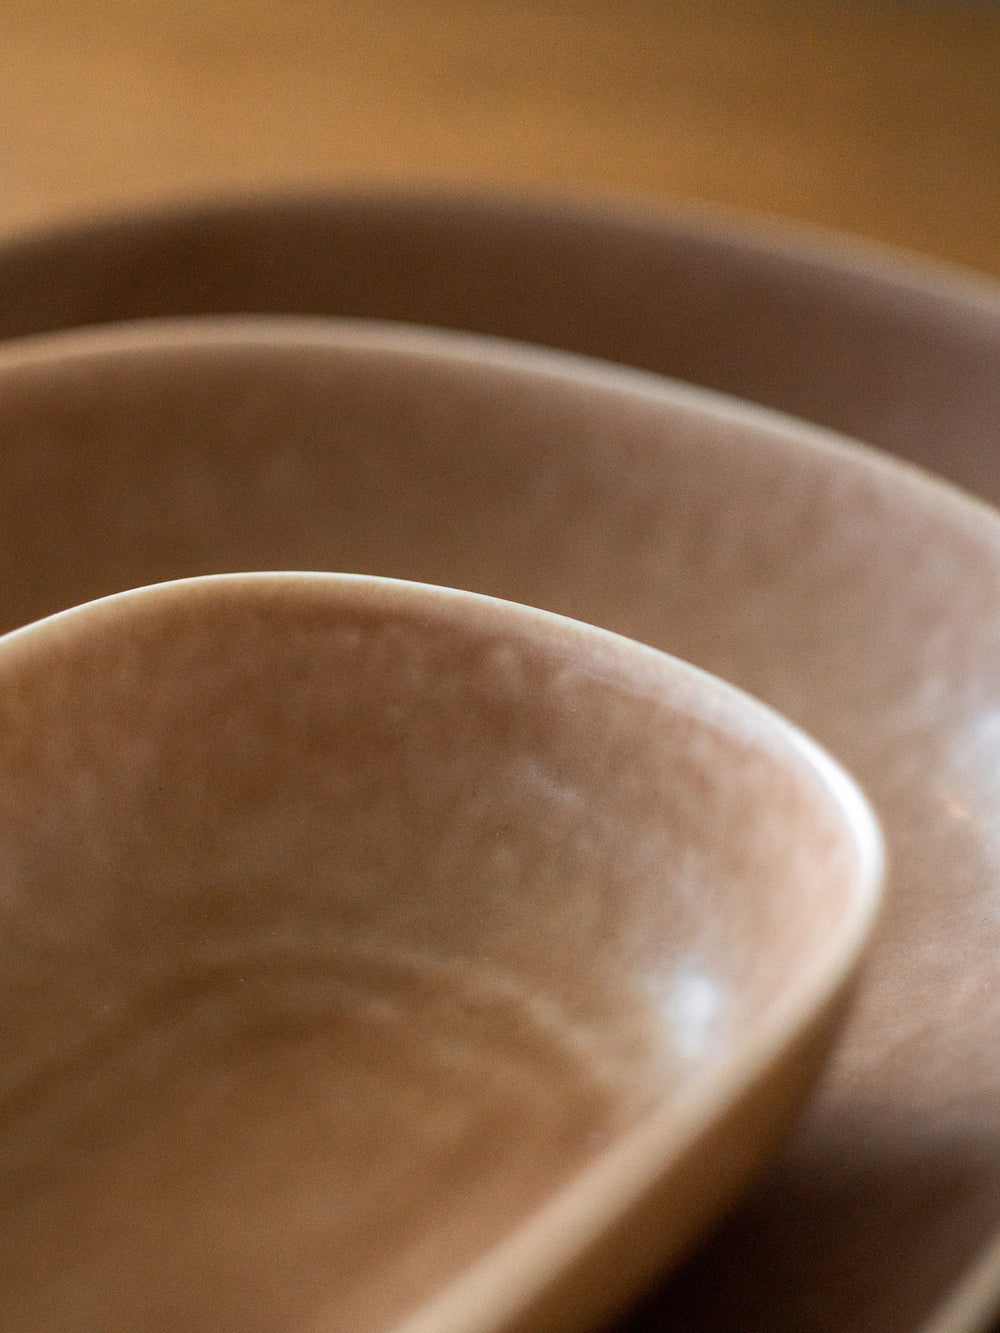 ReIRABO Oval Plate – Warm Soil Brown